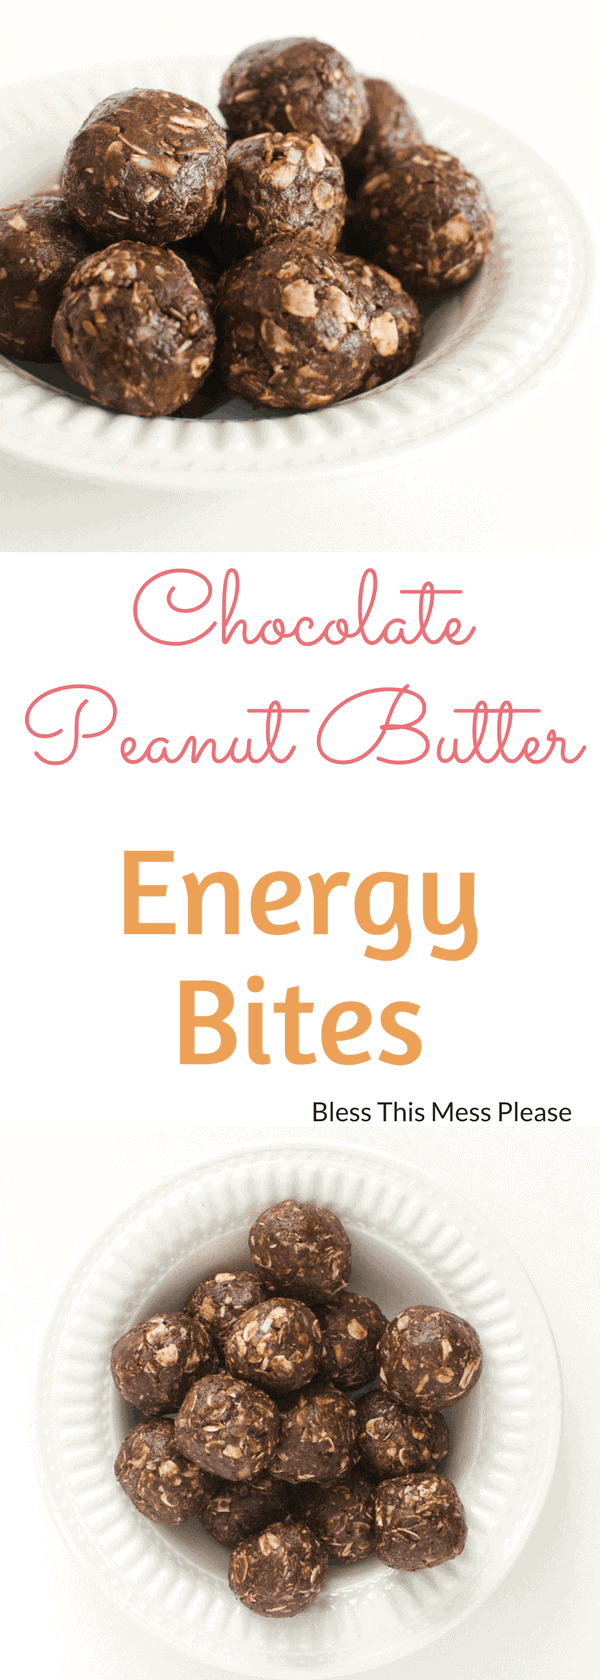 Chocolate Peanut Butter Energy Bites